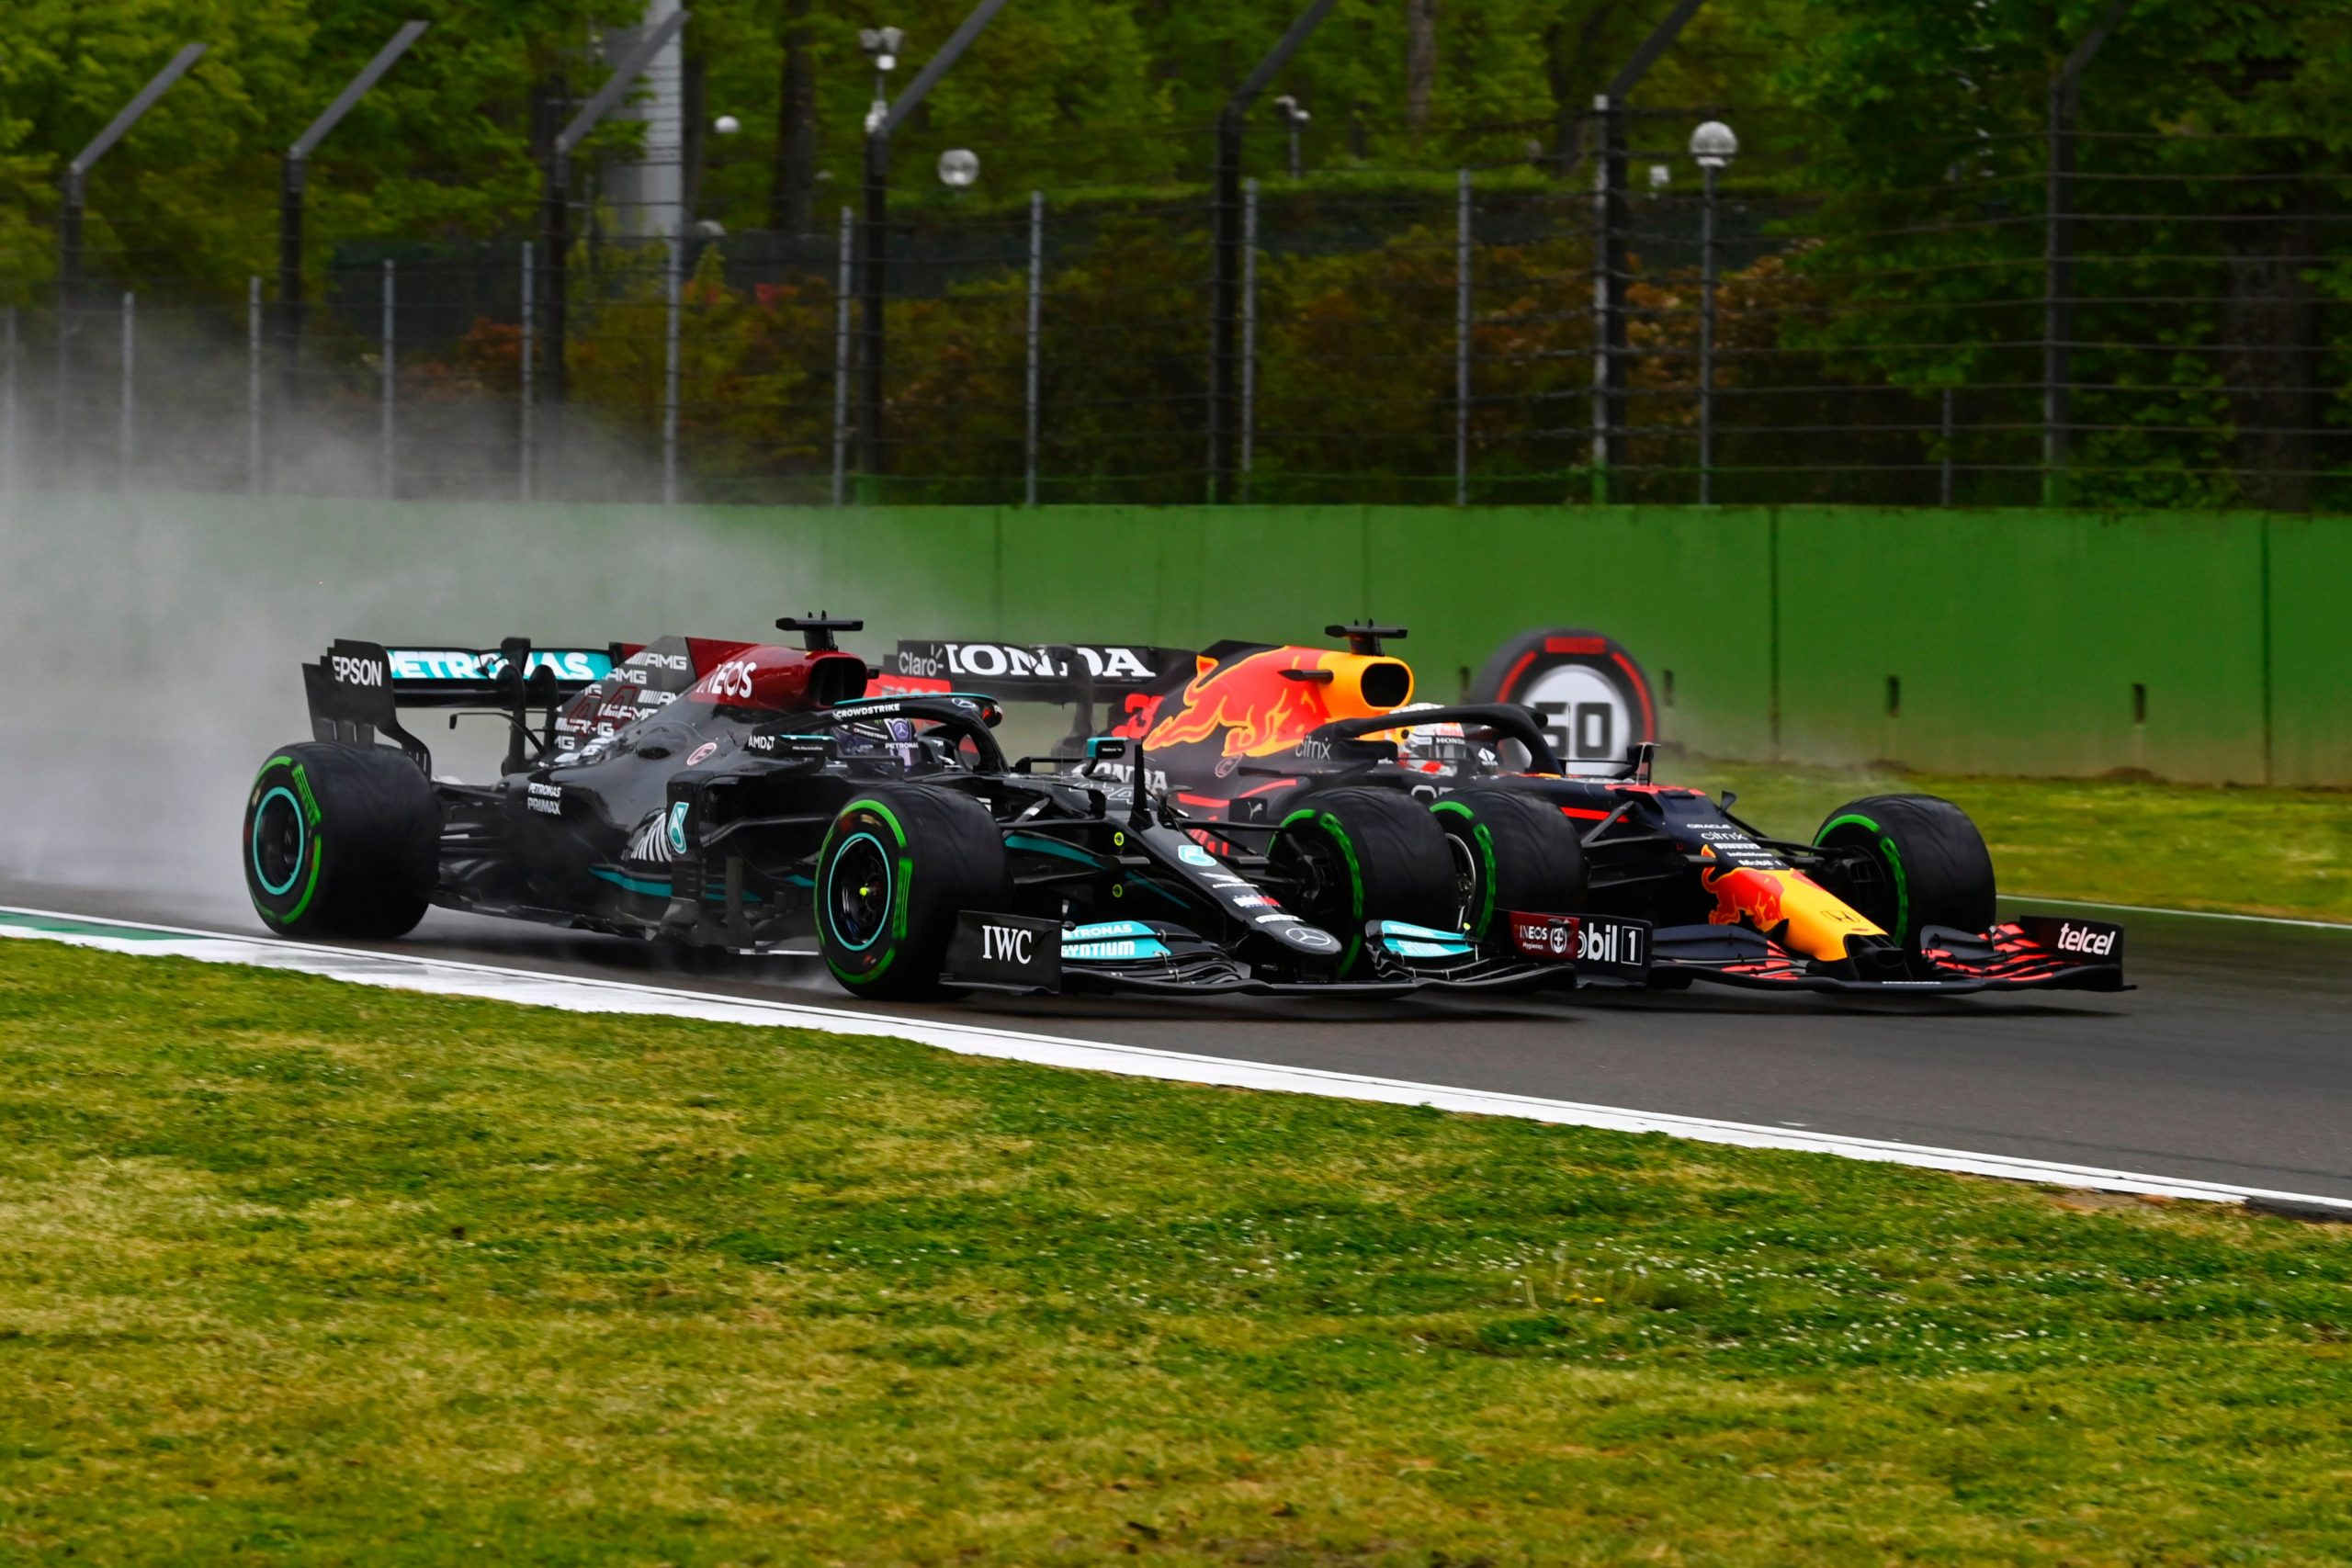 A disputa entre Hamilton e Verstappen é o grande destaque de 2021 até aqui (Crédito: Twitter / Mercedes)